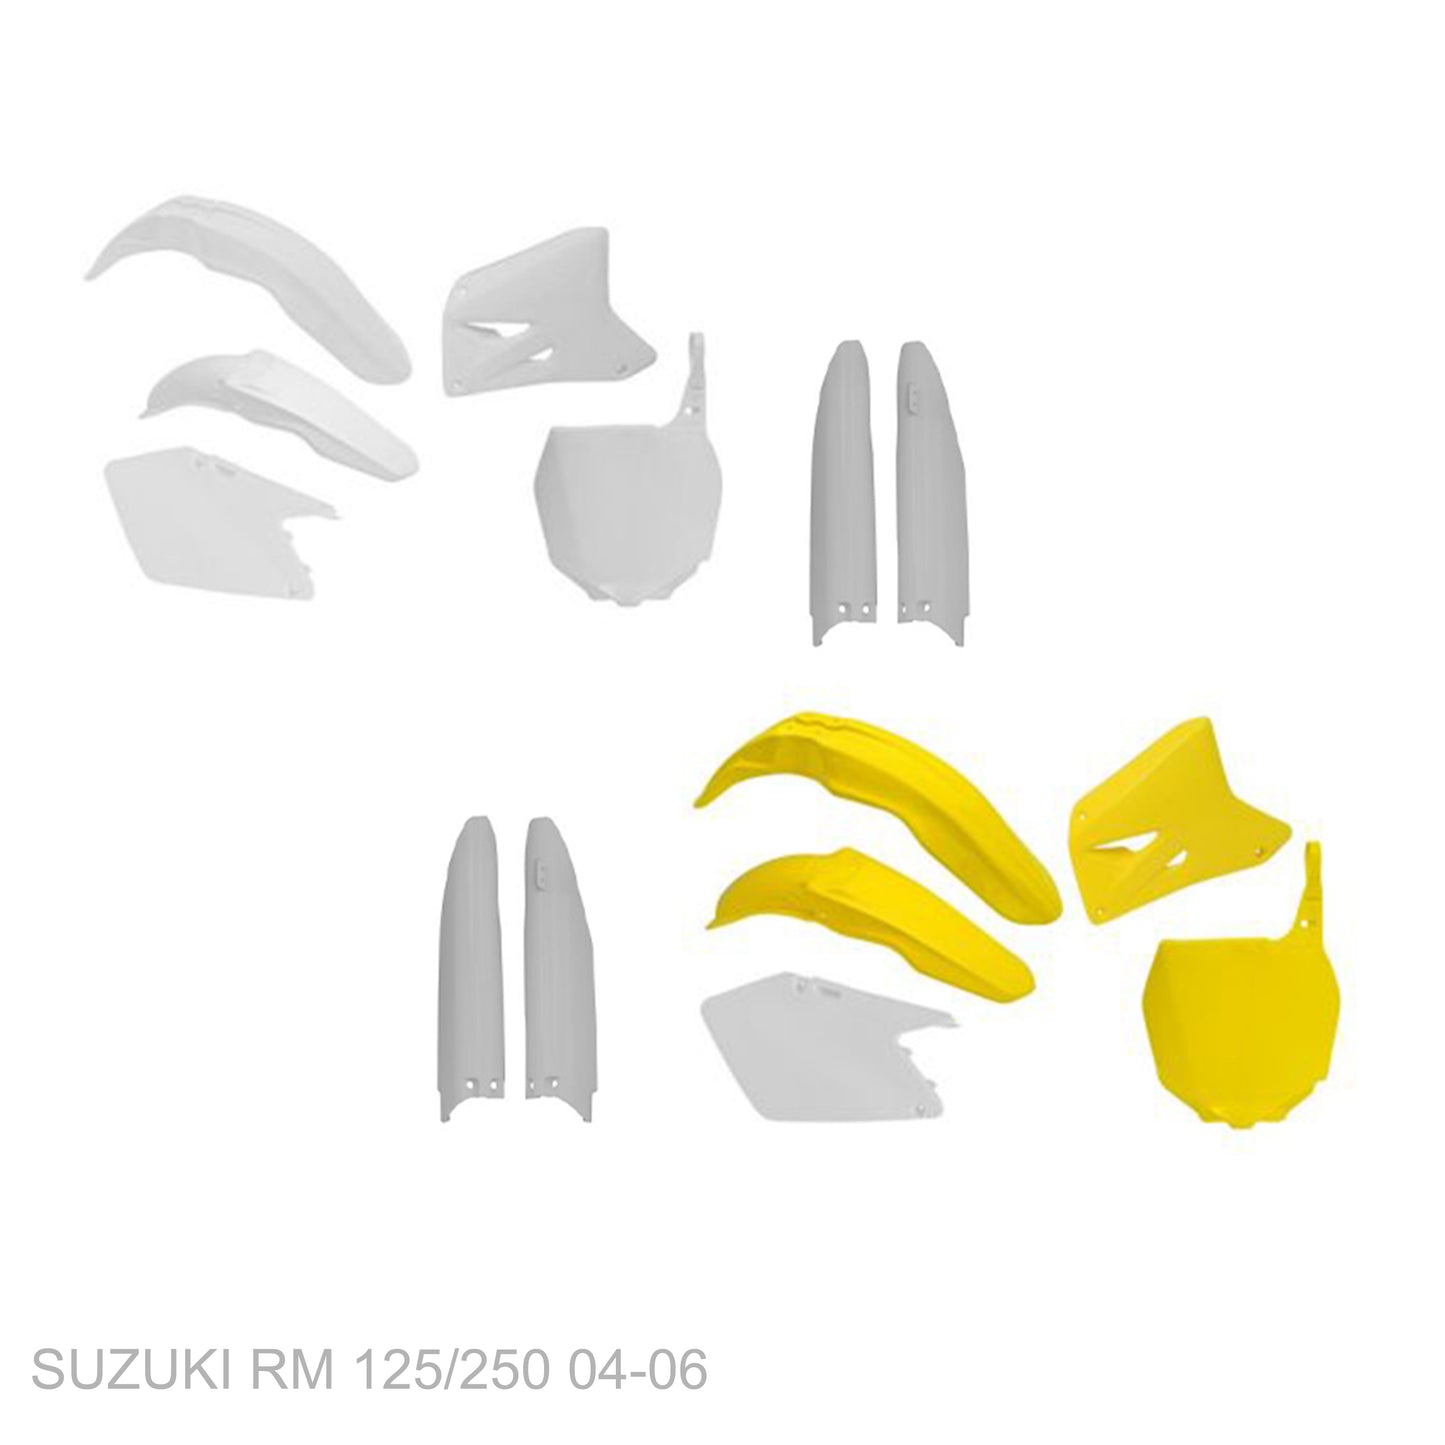 SUZUKI RM 125/250 2004-2006 Start From Scratch Graphics Kits